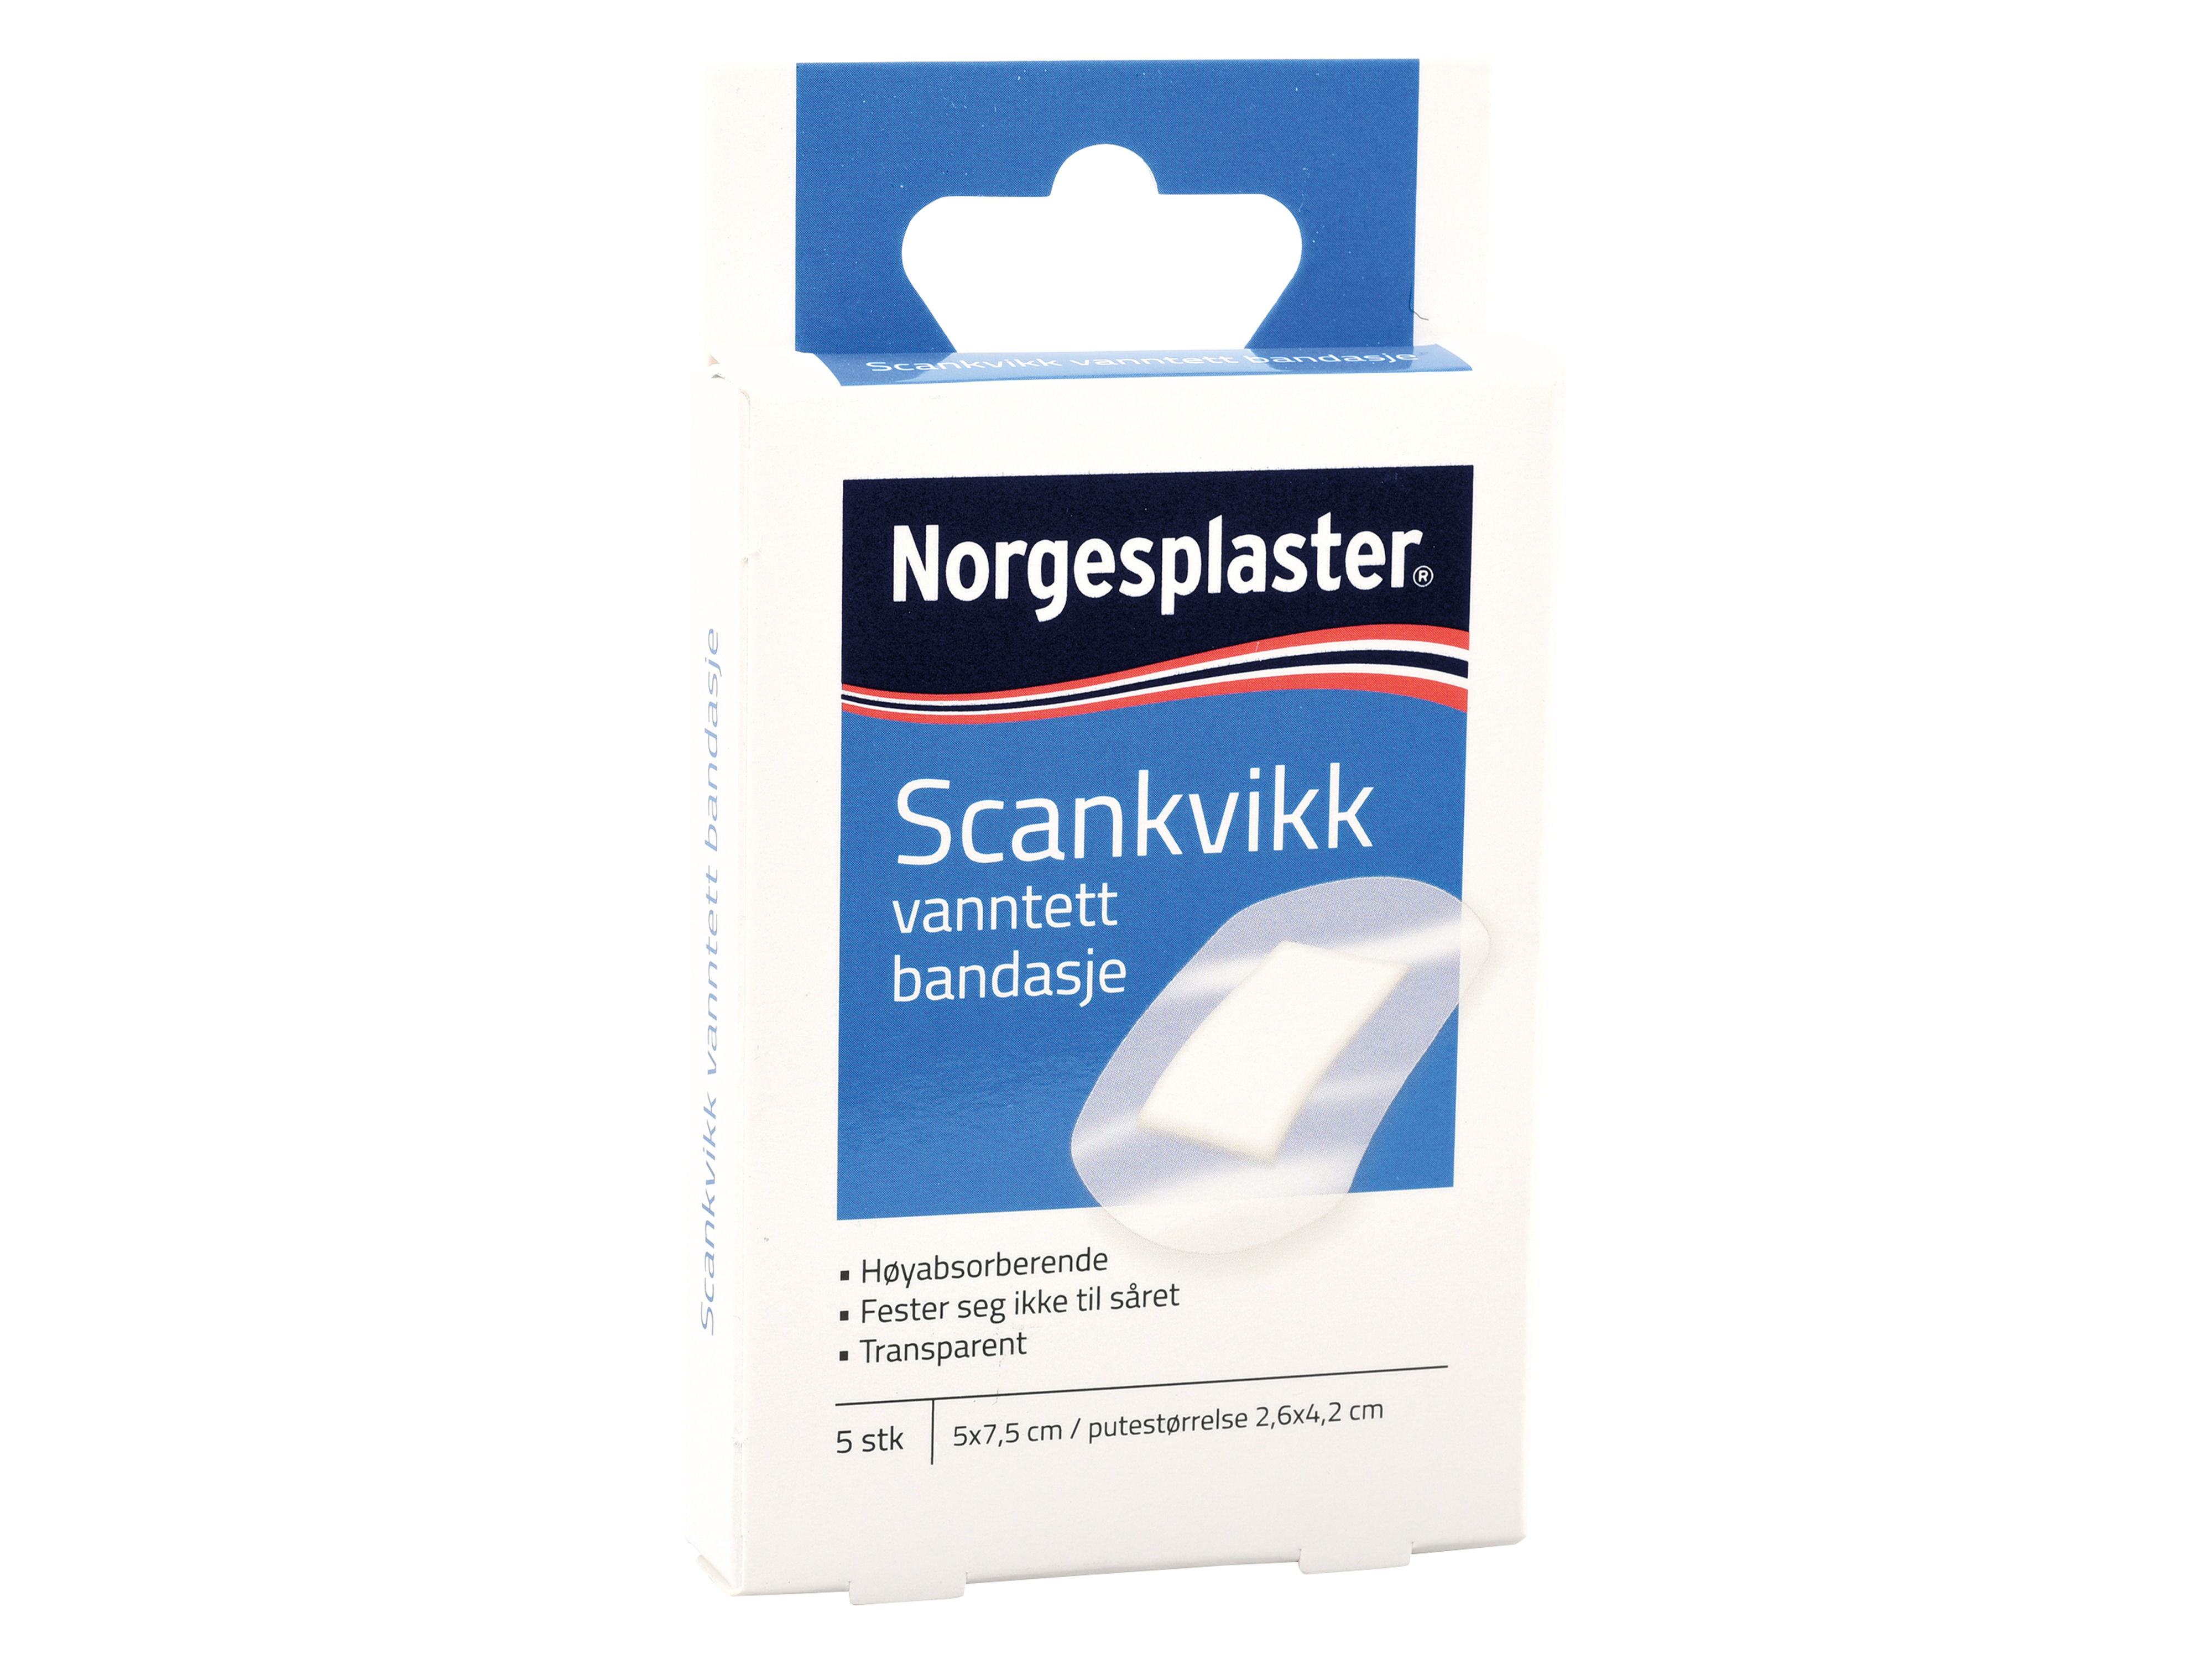 Norgesplaster Norgesplaster Scankvikk vanntett bandasje, 5x7,5 cm, 5 stk.